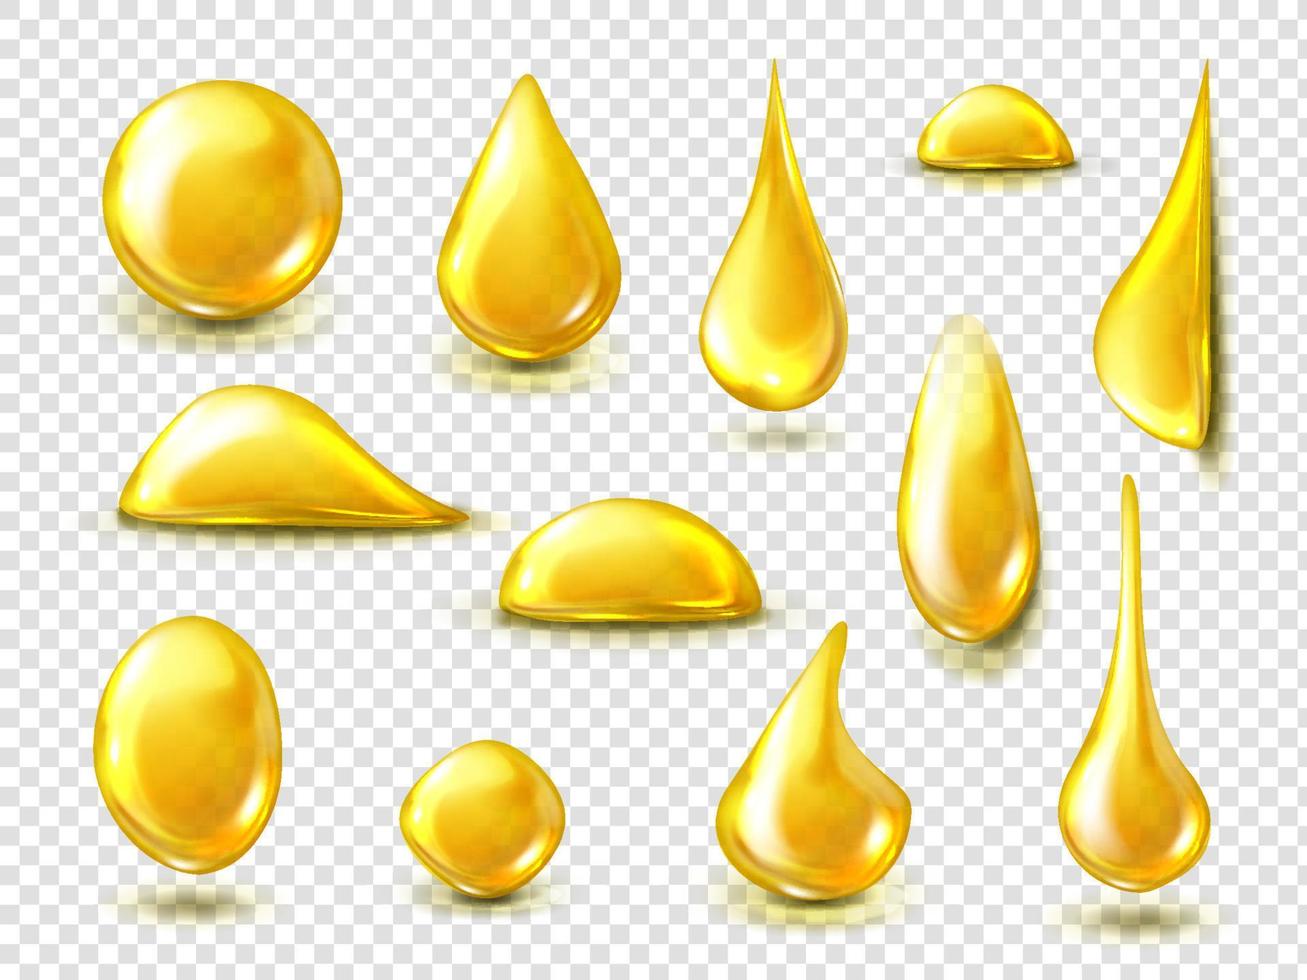 conjunto realista de gotas doradas de aceite o miel vector